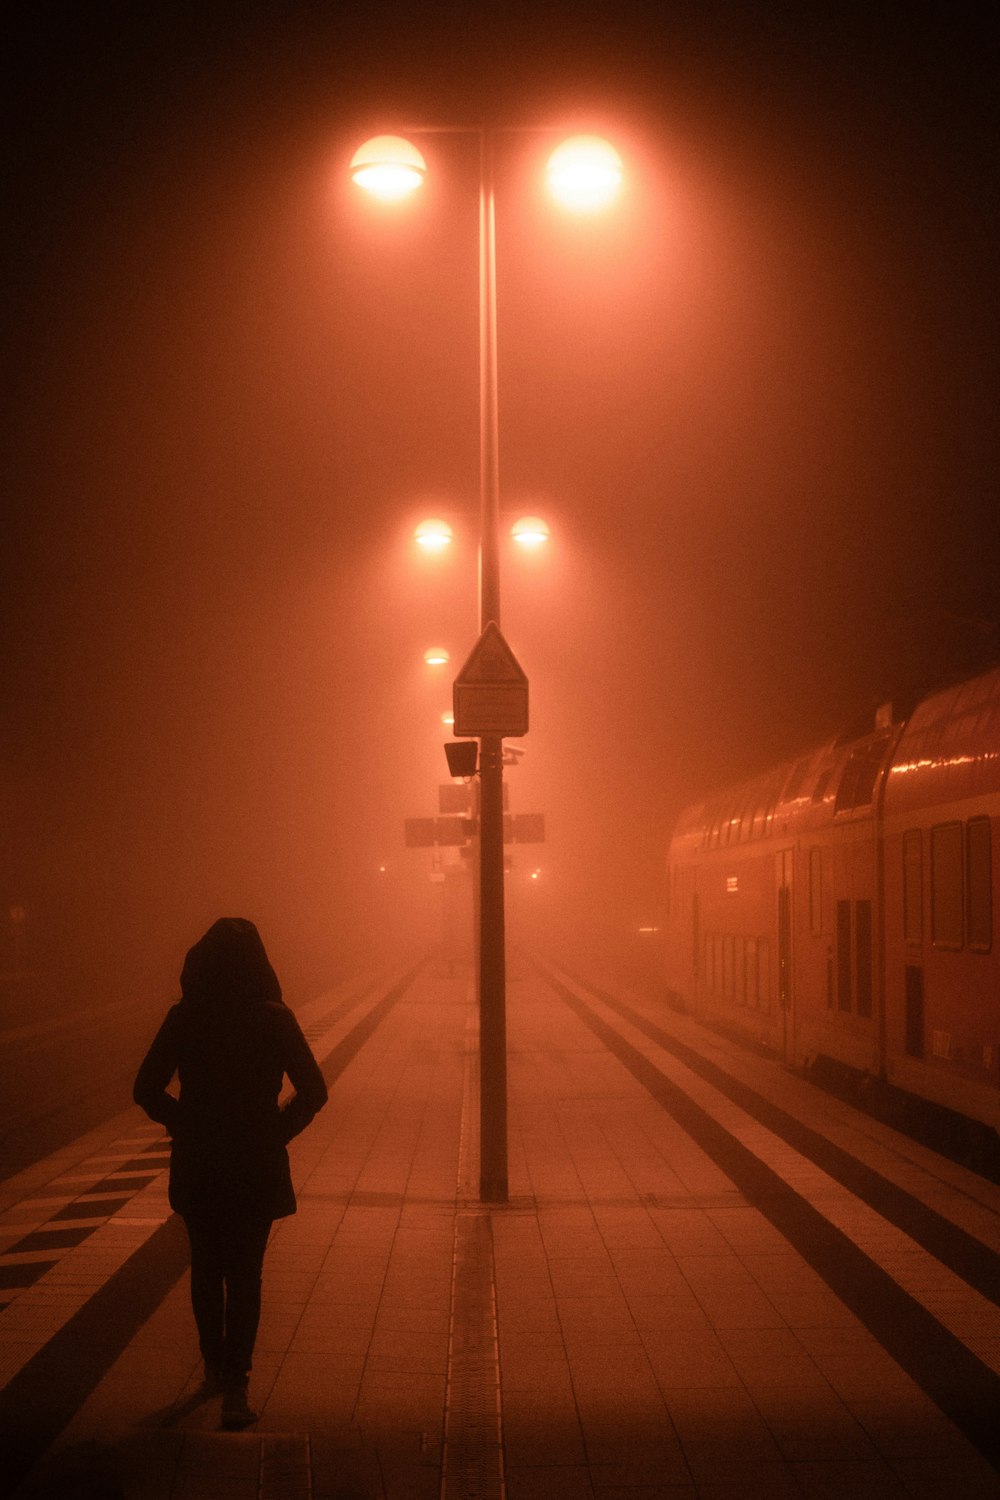 Hombre con chaqueta negra de pie cerca del tren durante la noche